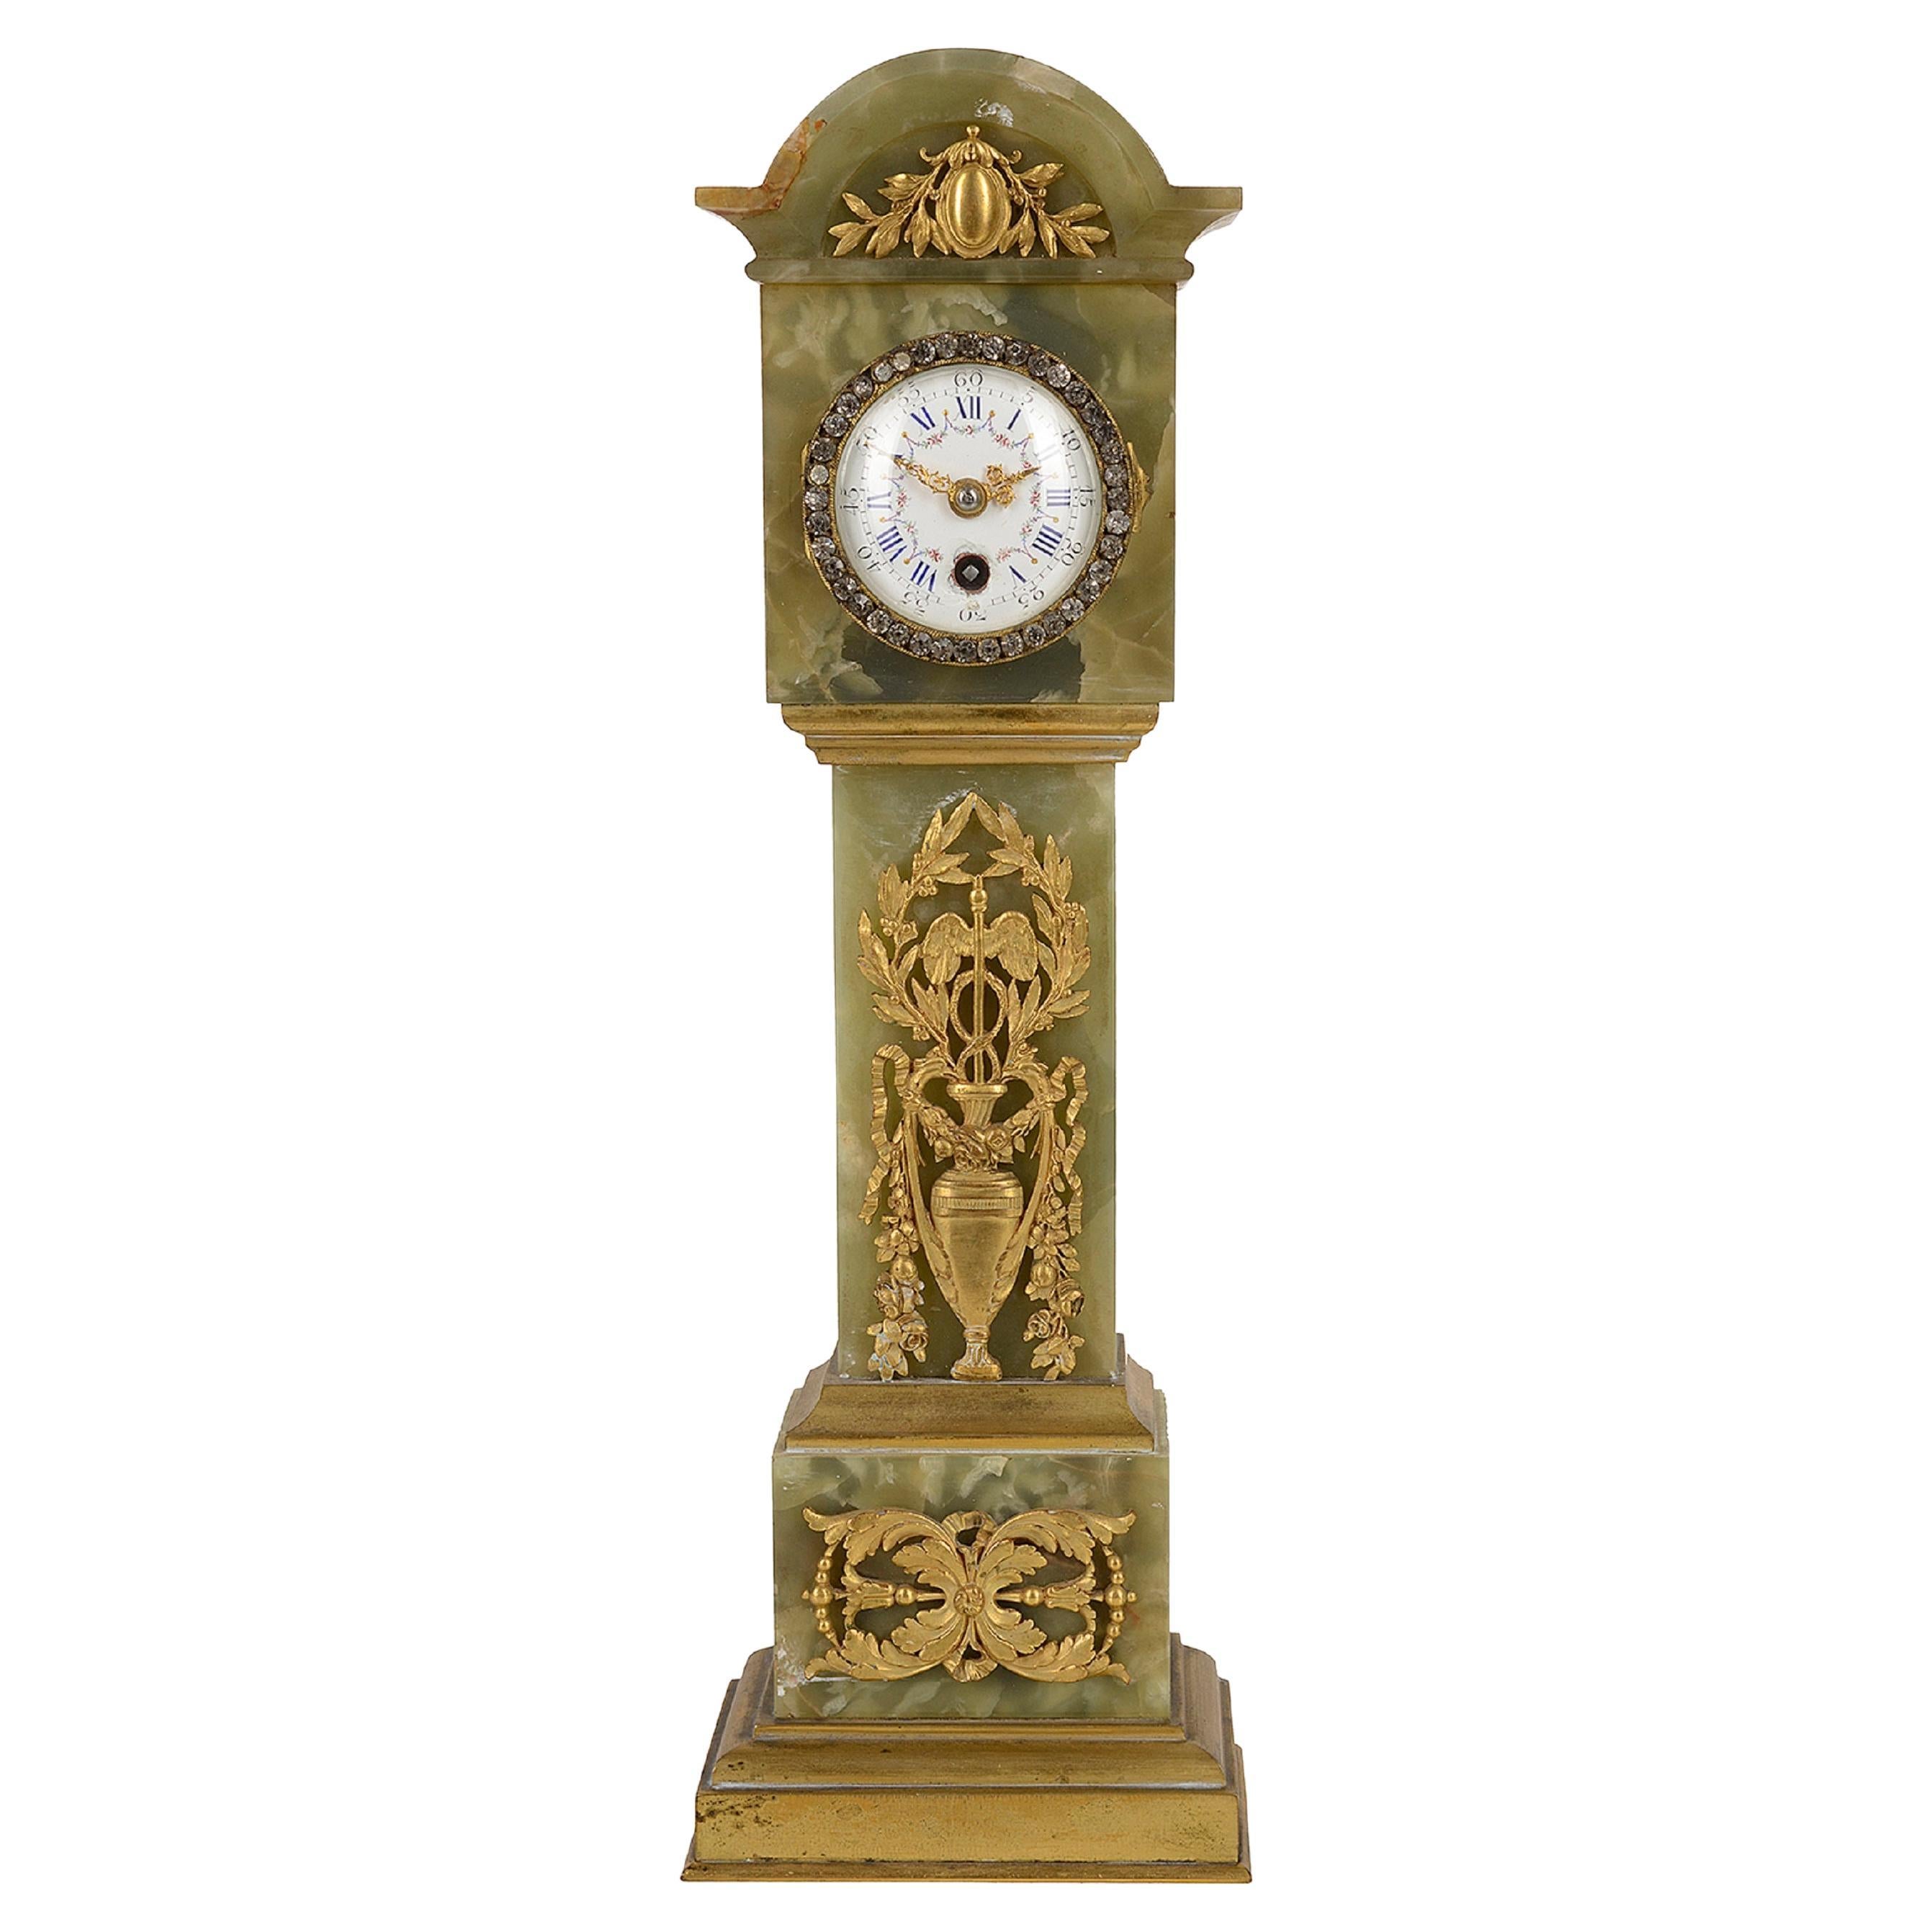 Minature Onyx + Ormolu Table/Mantel Clock, Late 19th Century